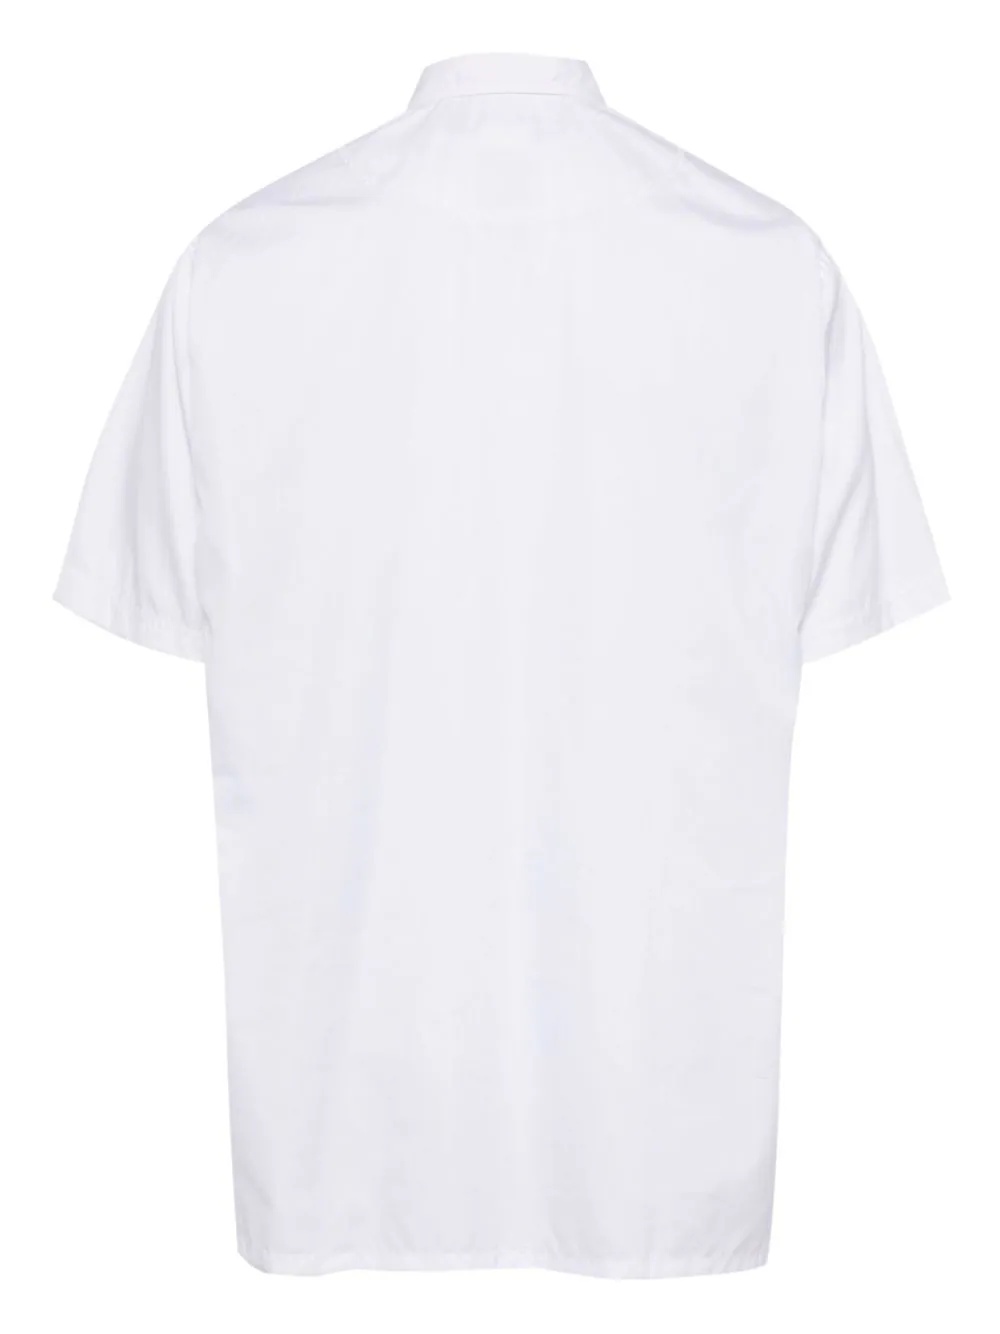 Cotton Broad Multi Fabrics Shirt - 2